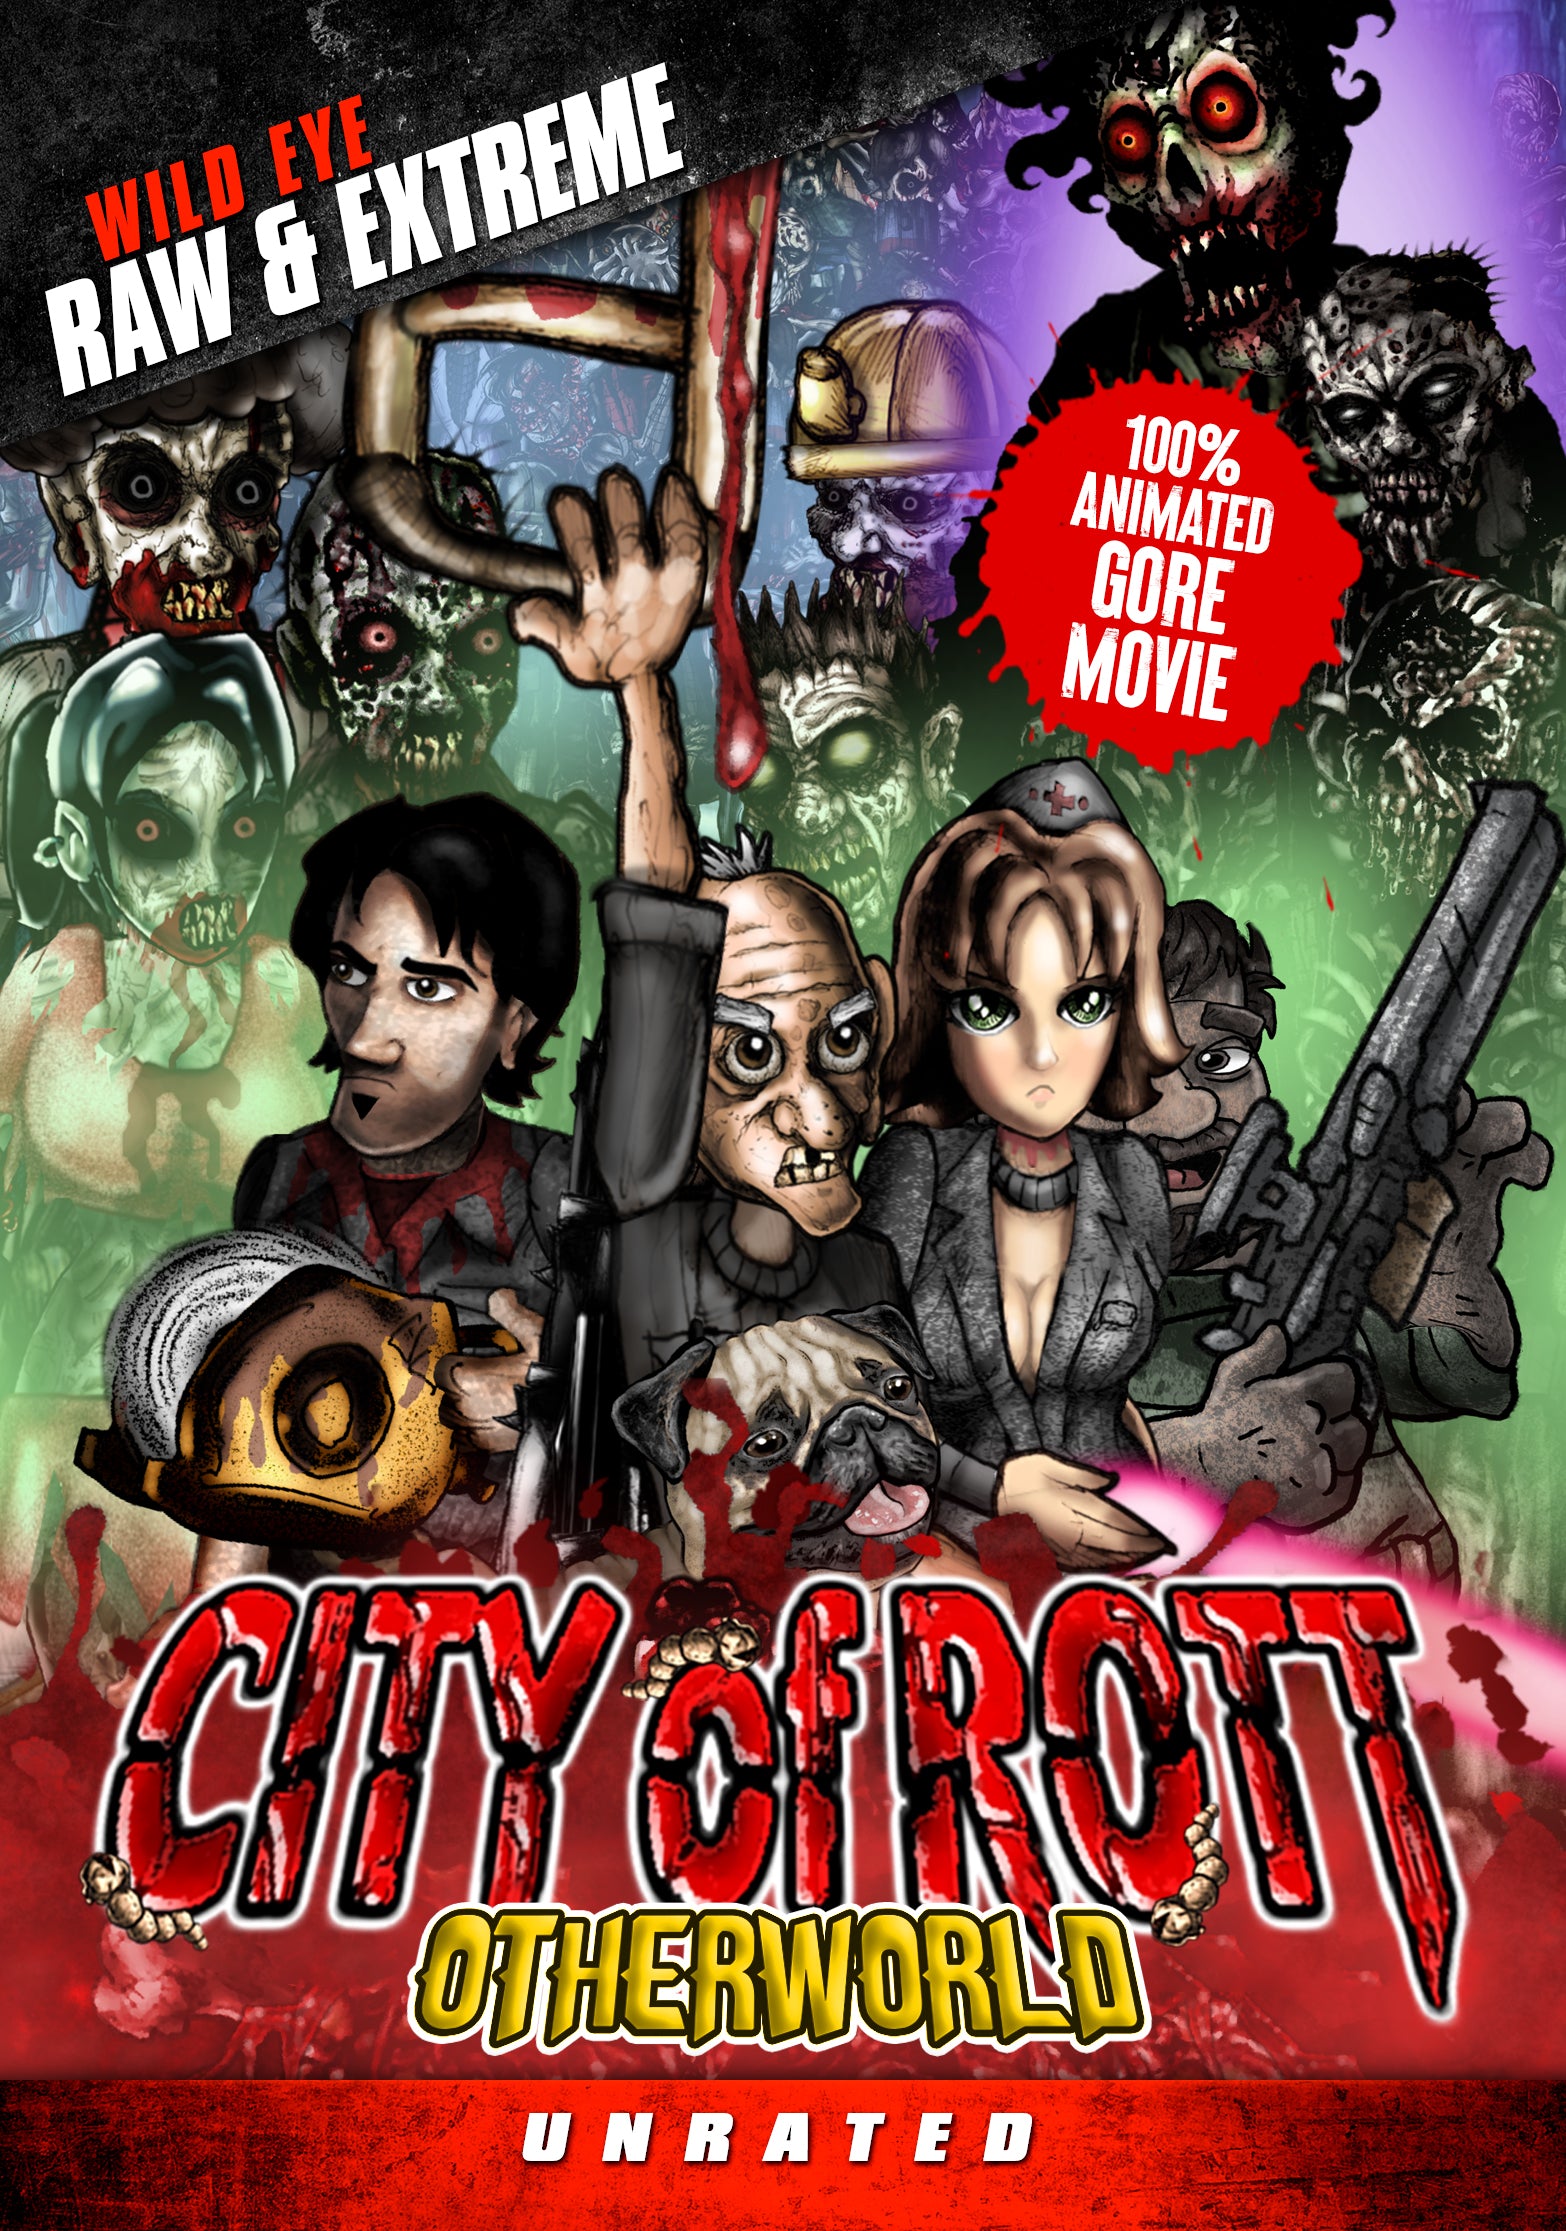 CITY OF ROTT: OTHERWORLD DVD